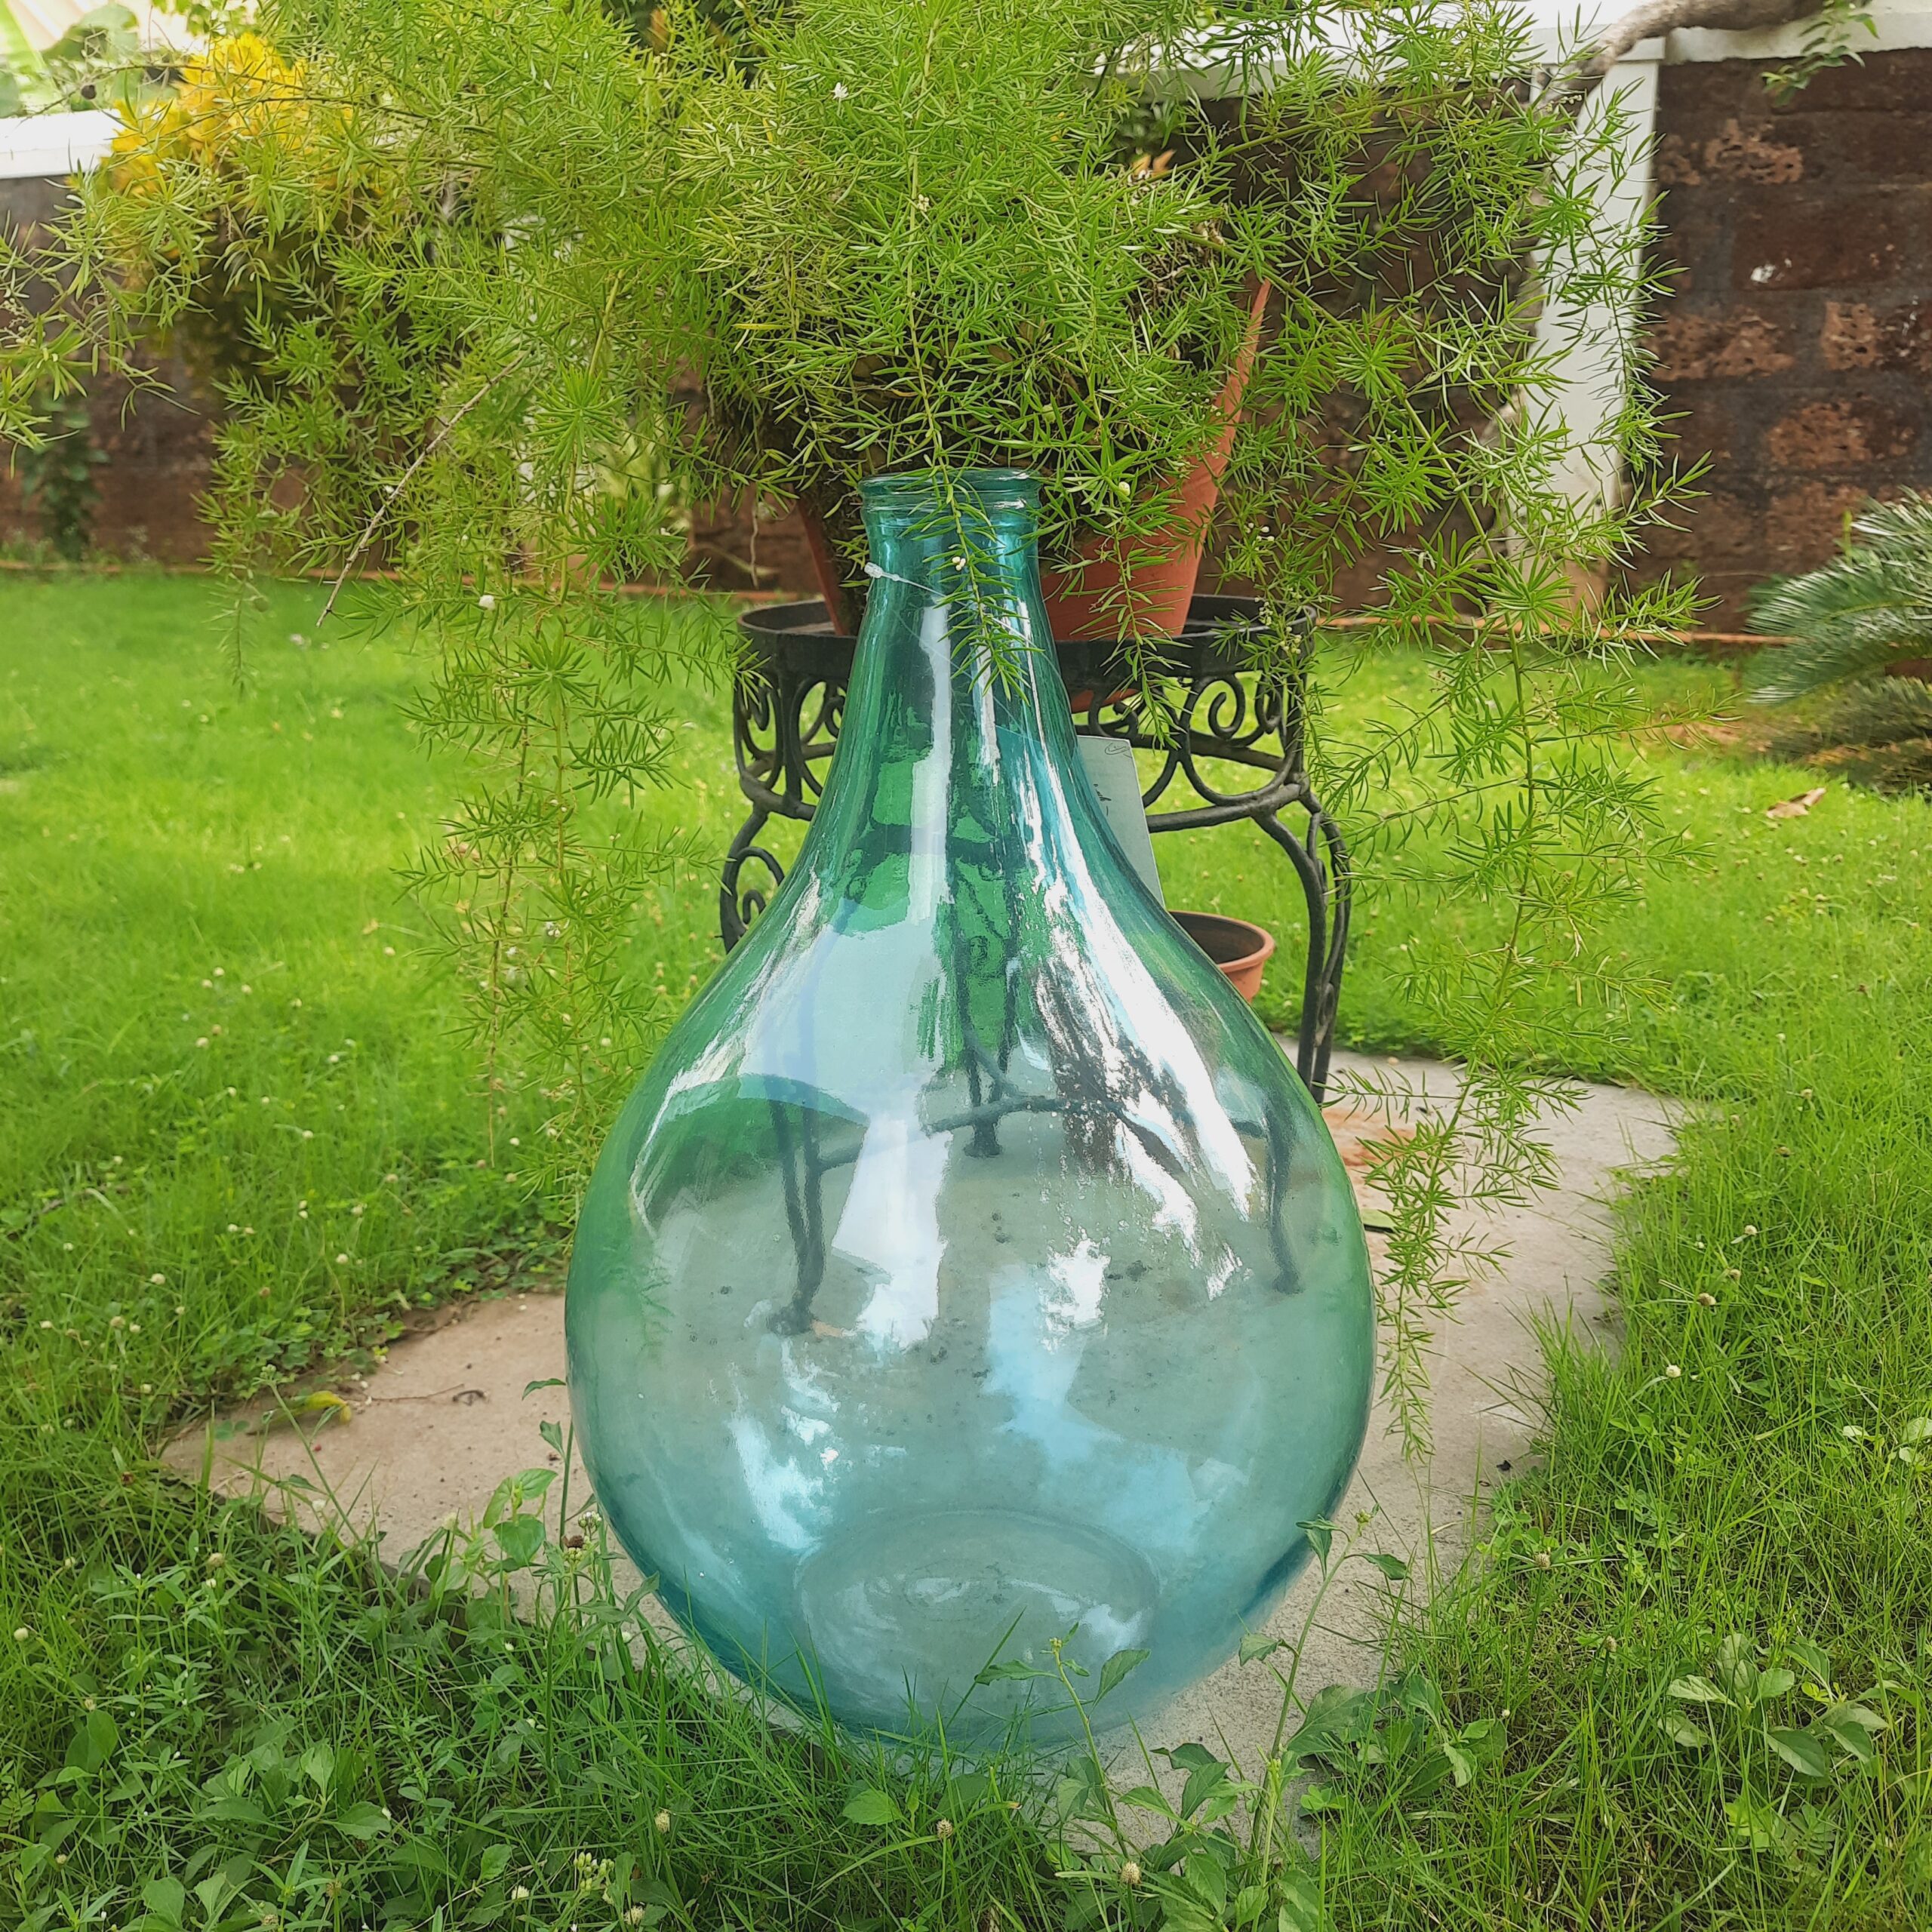 Demijohns in Indian Decor | Blue vintage demijohn bottle with green plants in a garden